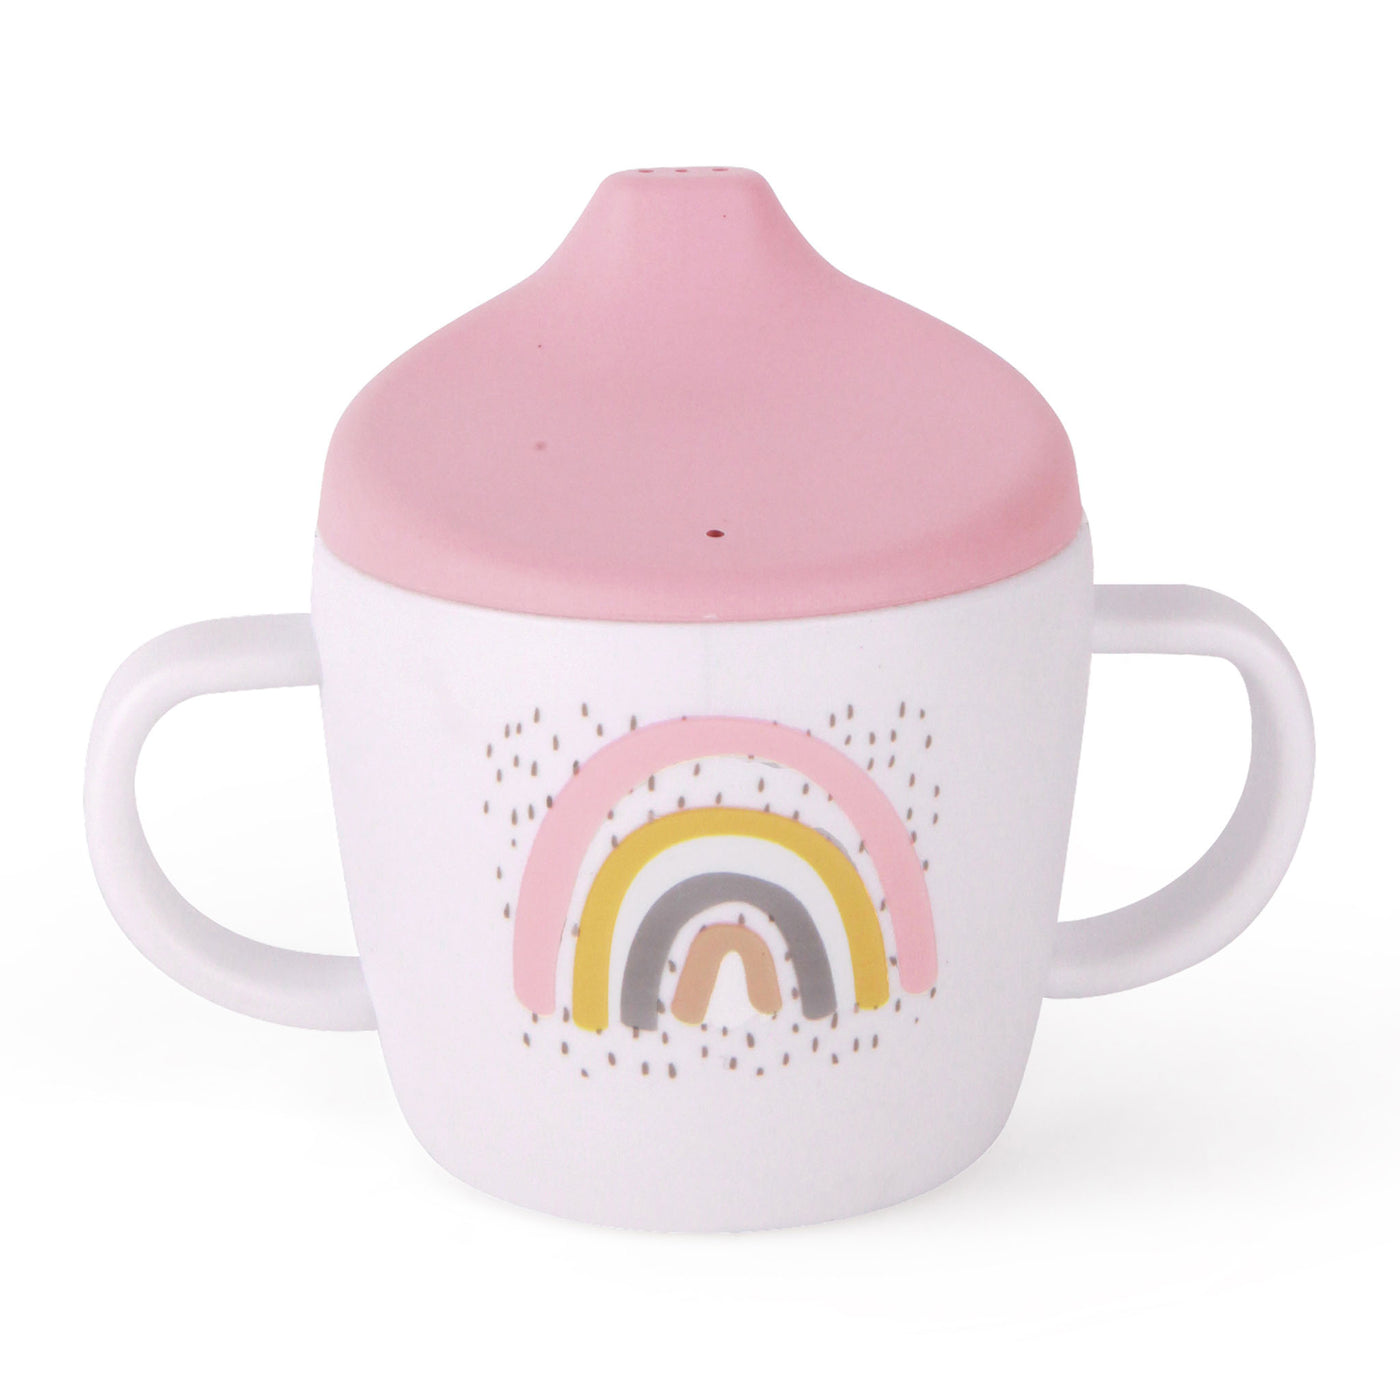 Sippy Cup - Rainbow